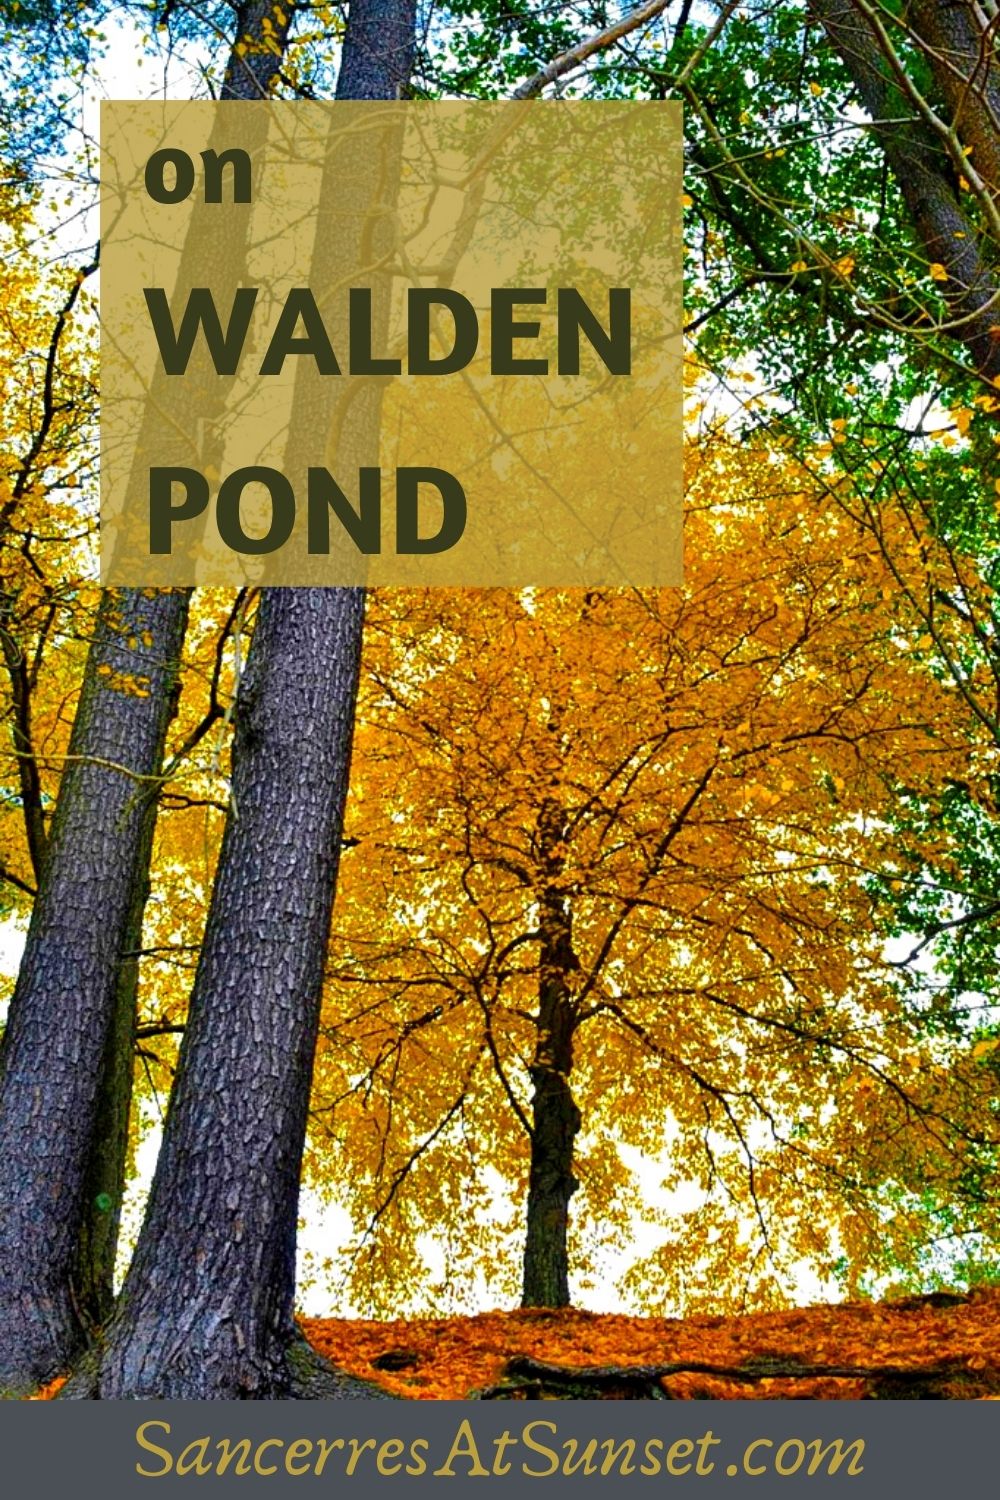 Walden Pond in Concord, Massachusetts